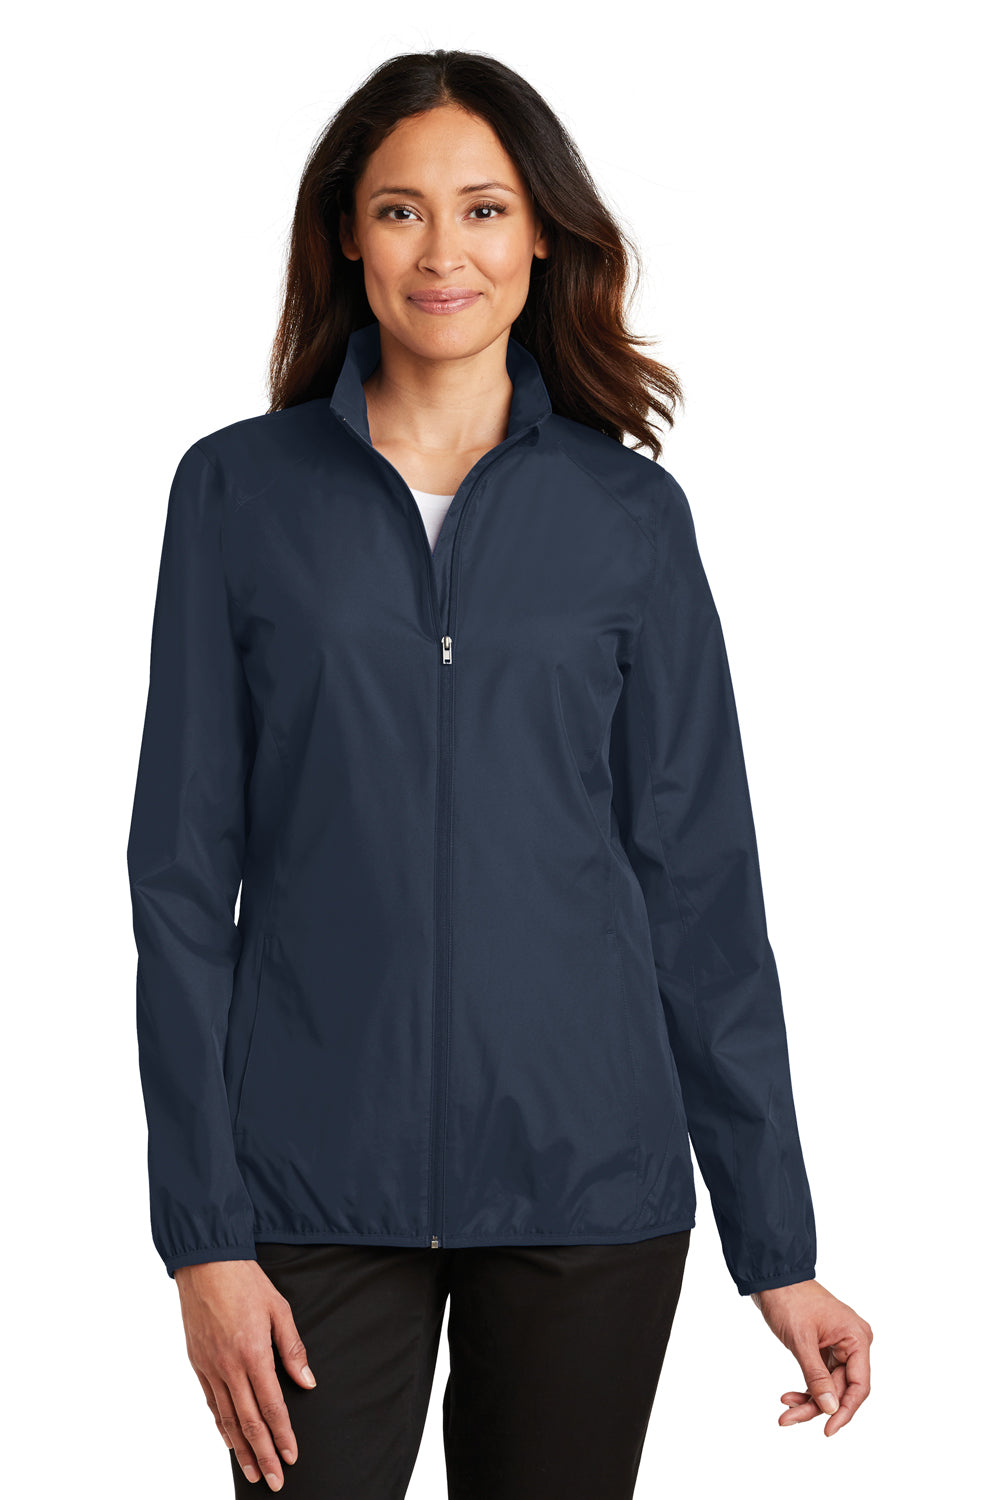 Port Authority L344 Womens Zephyr Wind & Water Resistant Full Zip Jacket Navy Blue Front